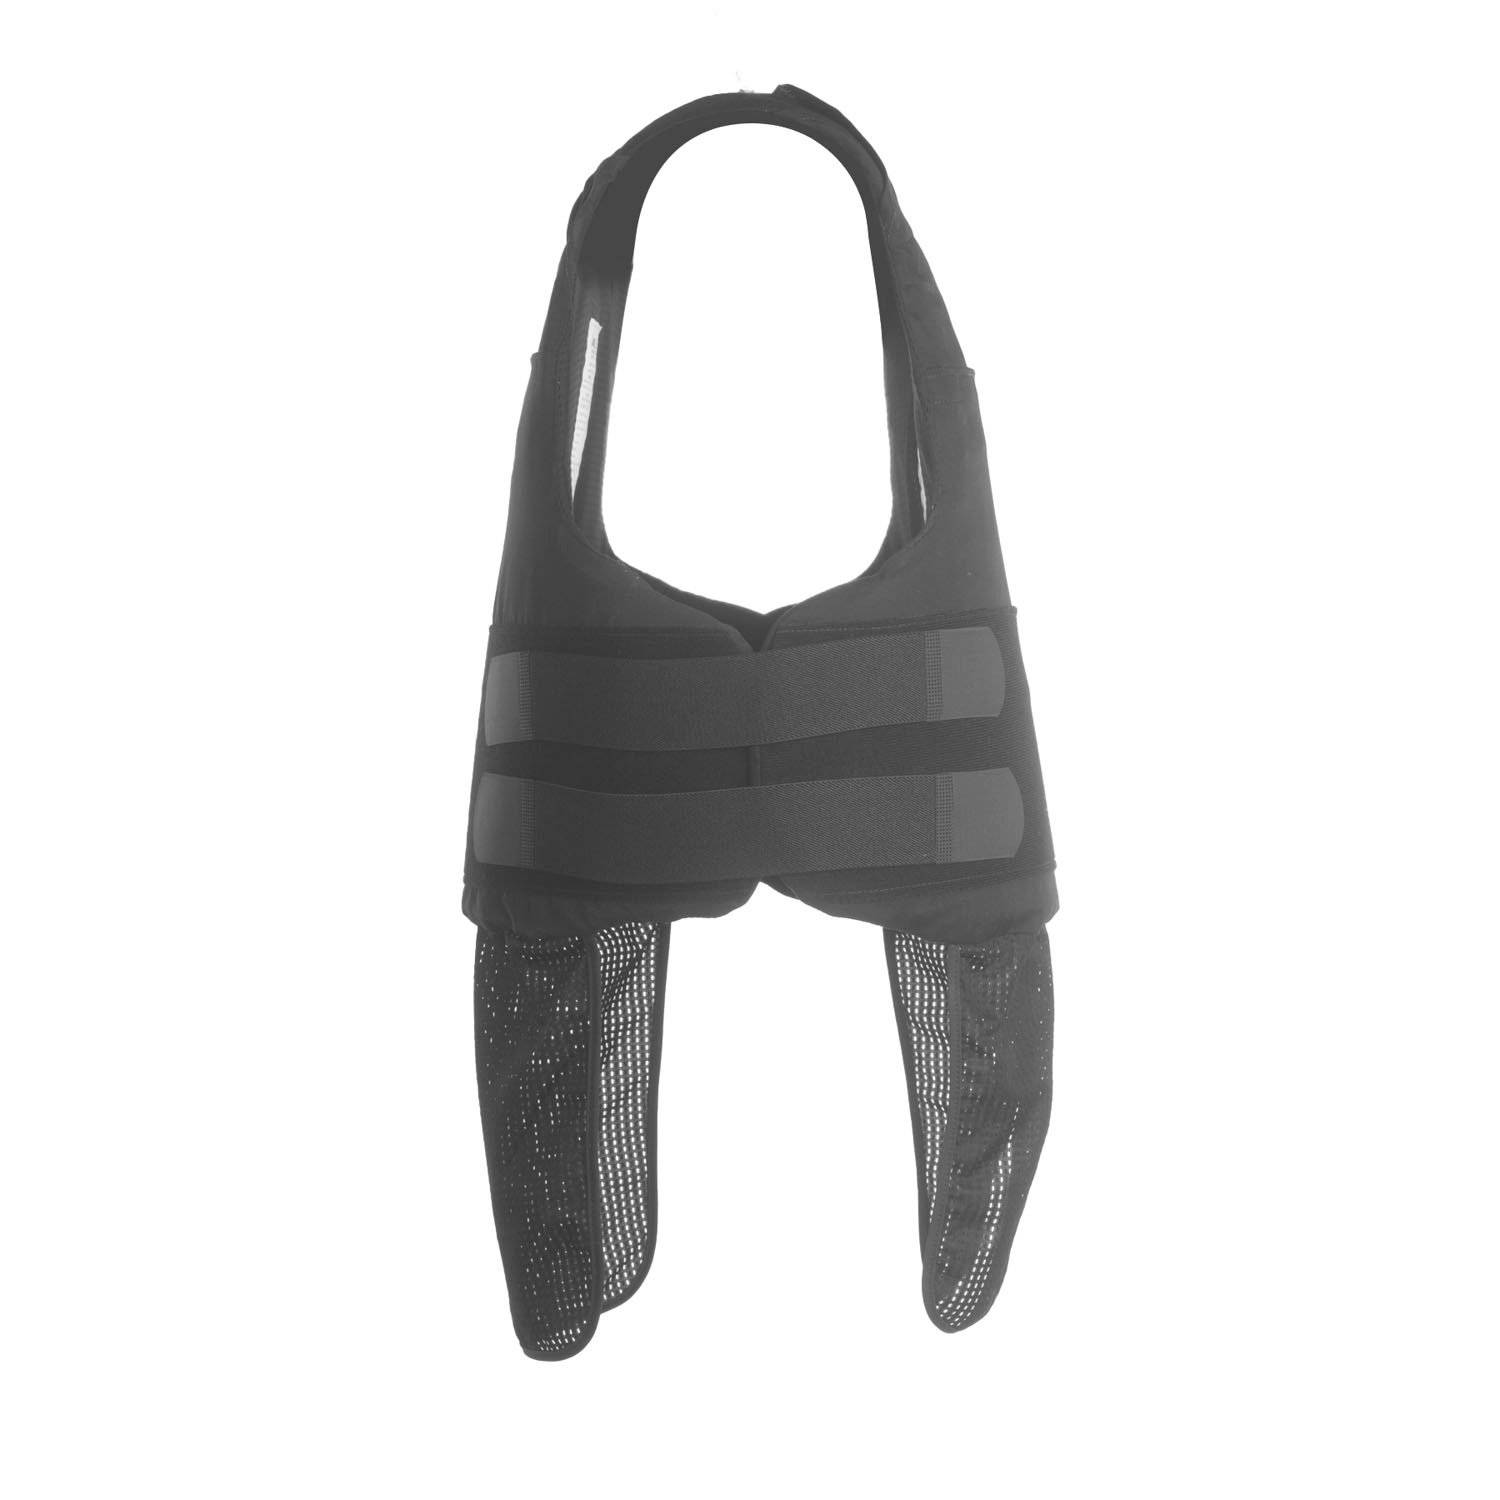 Armor Weight Bag w/Zipper - Force-E Scuba Centers